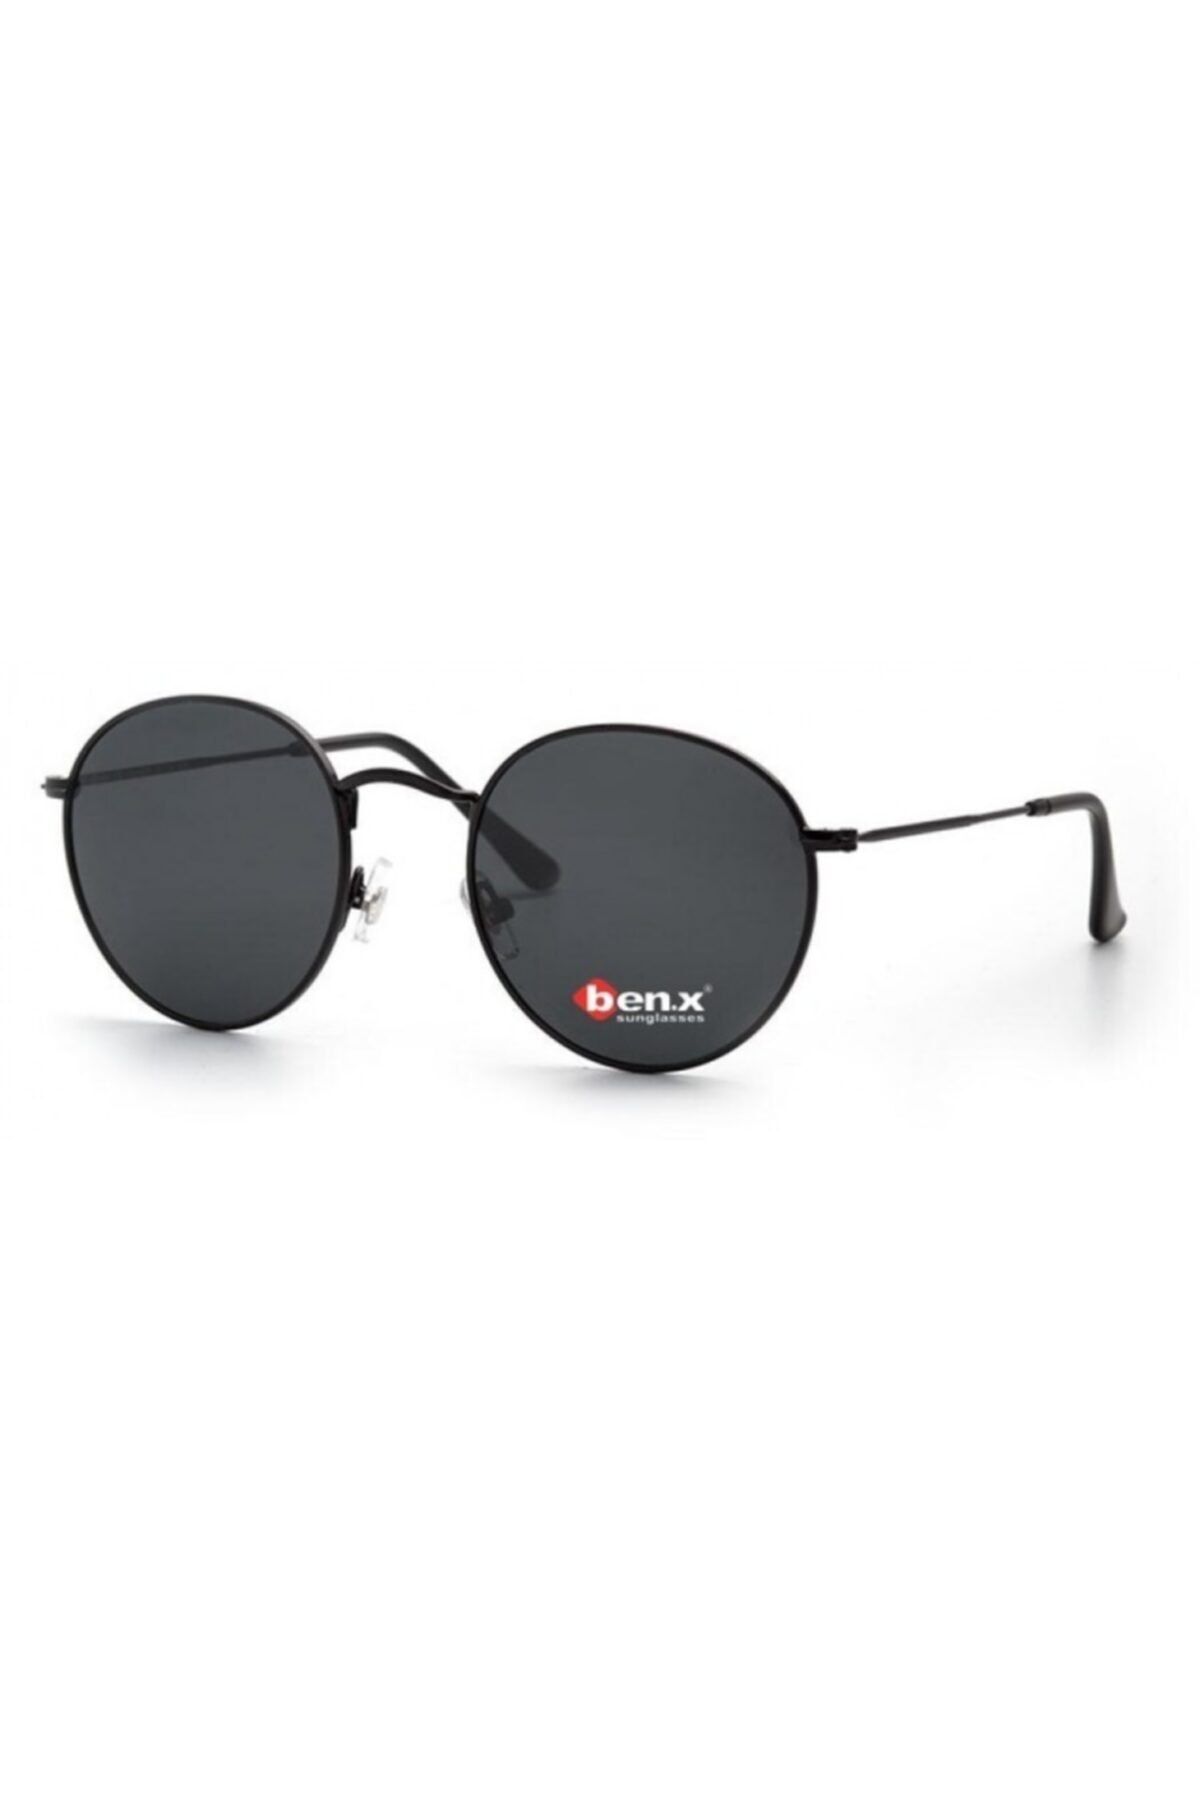 Benx Sunglasses Benx 8006 08 48